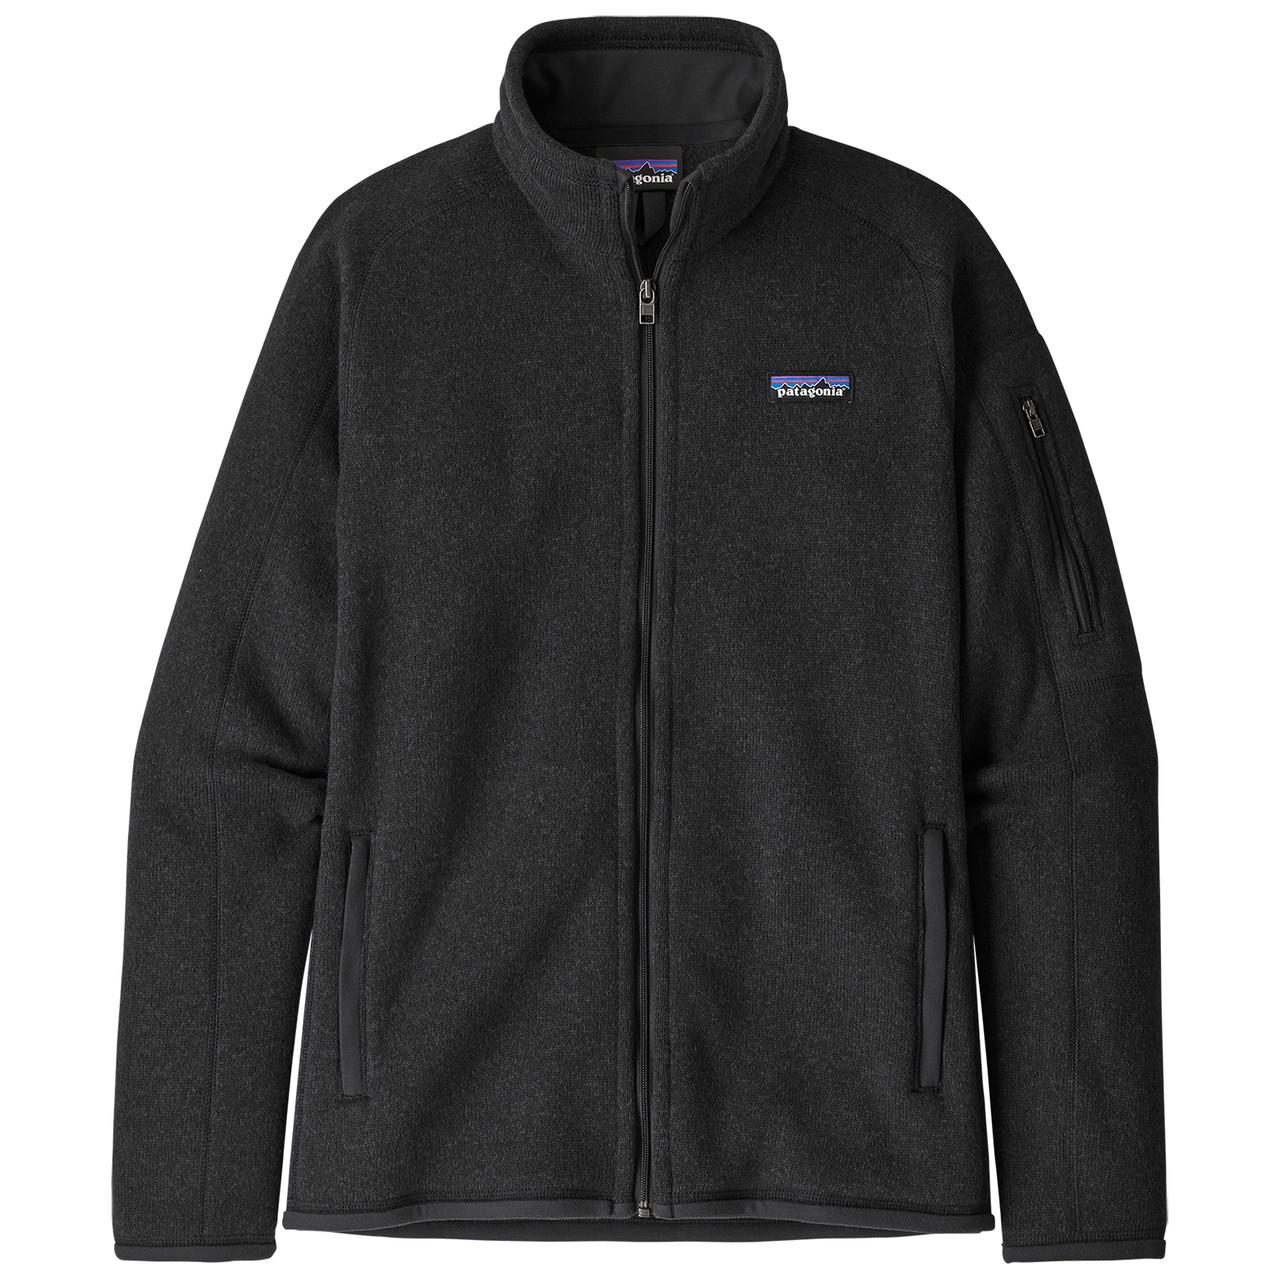 Patagonia W's Better Sweater Jacket - Black - Medium